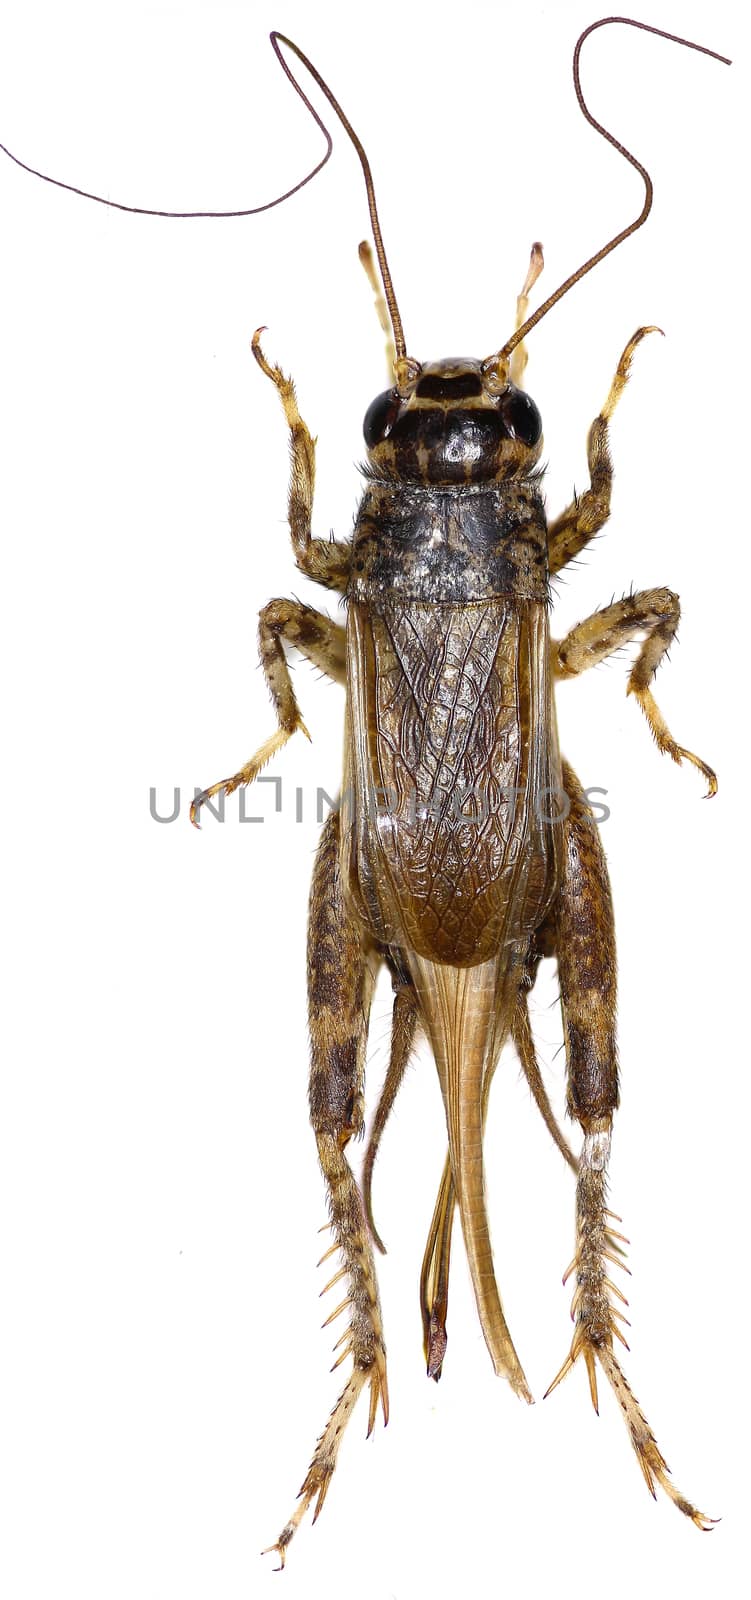 Cricket (insect) on white Background  -  Eumodicogryllus bordigalensis (Latreille, 1804)